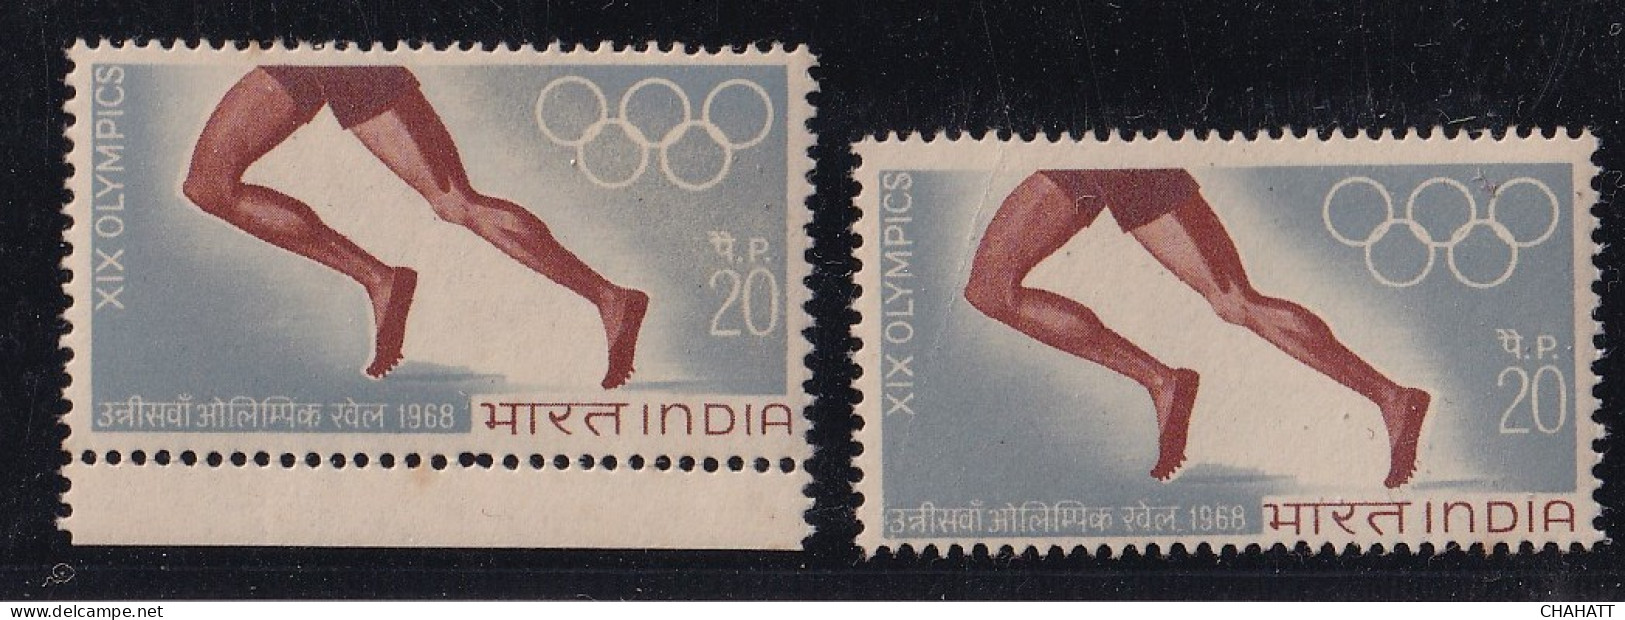 INDIA-19th OLYMPICS- 20p- ERROR-FRAME SHIFTING-MNH-IE-51 - Varietà & Curiosità